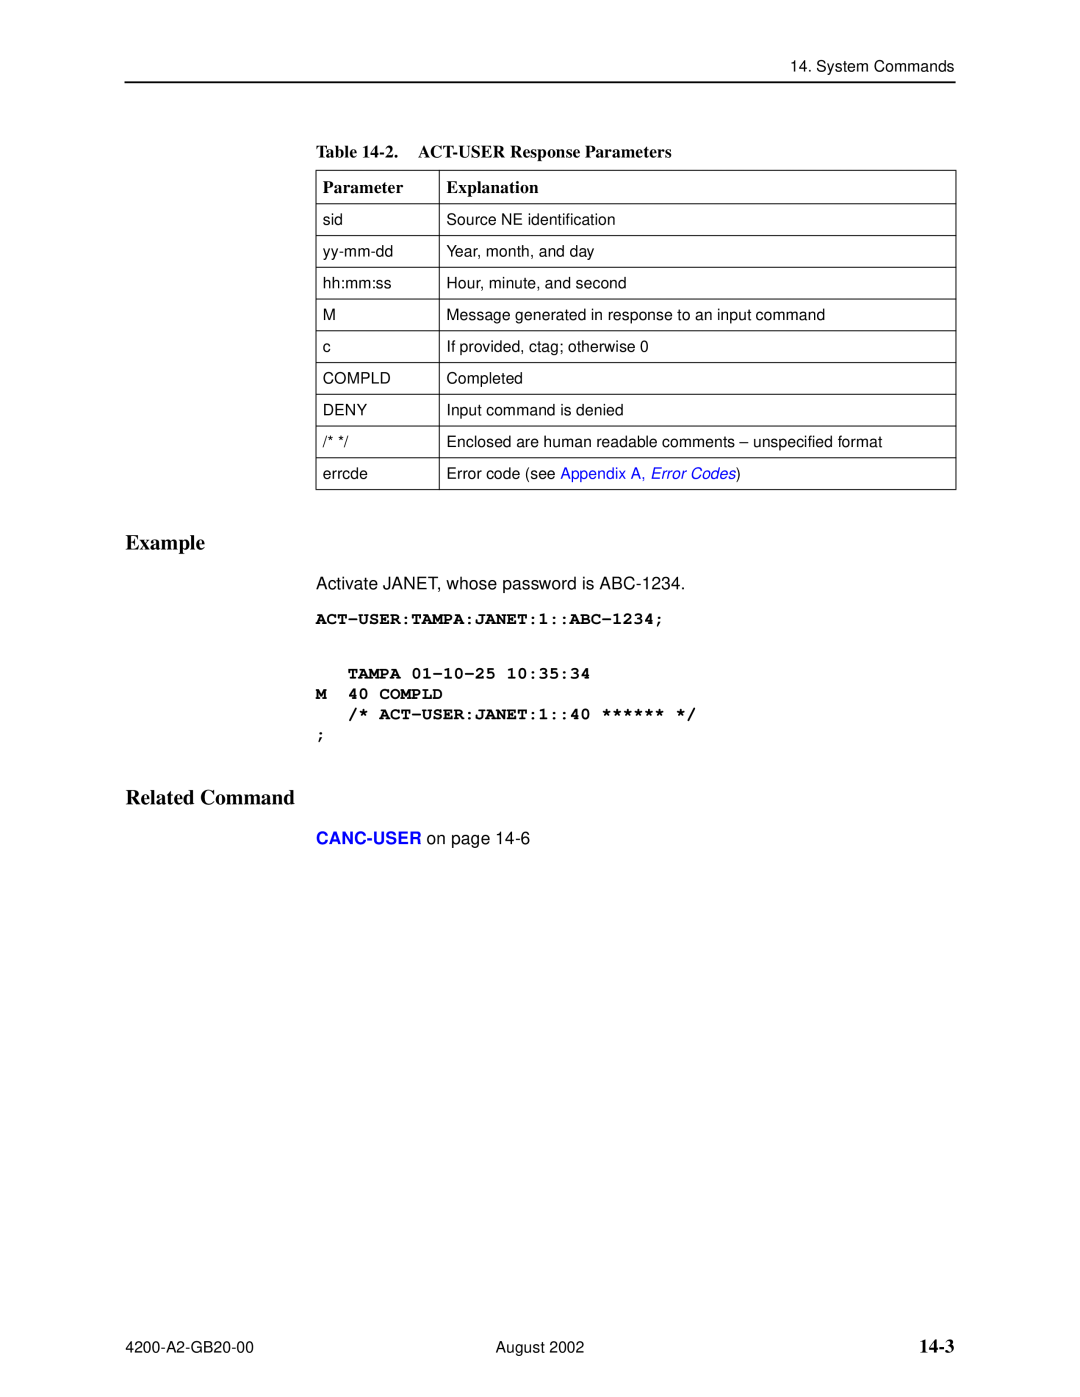 Paradyne 4200 manual 14-3, 2. ACT-USER Response Parameters, ACT-USERTAMPAJANET1ABC-1234 TAMPA 01-10-25 M 40 COMPLD, Example 